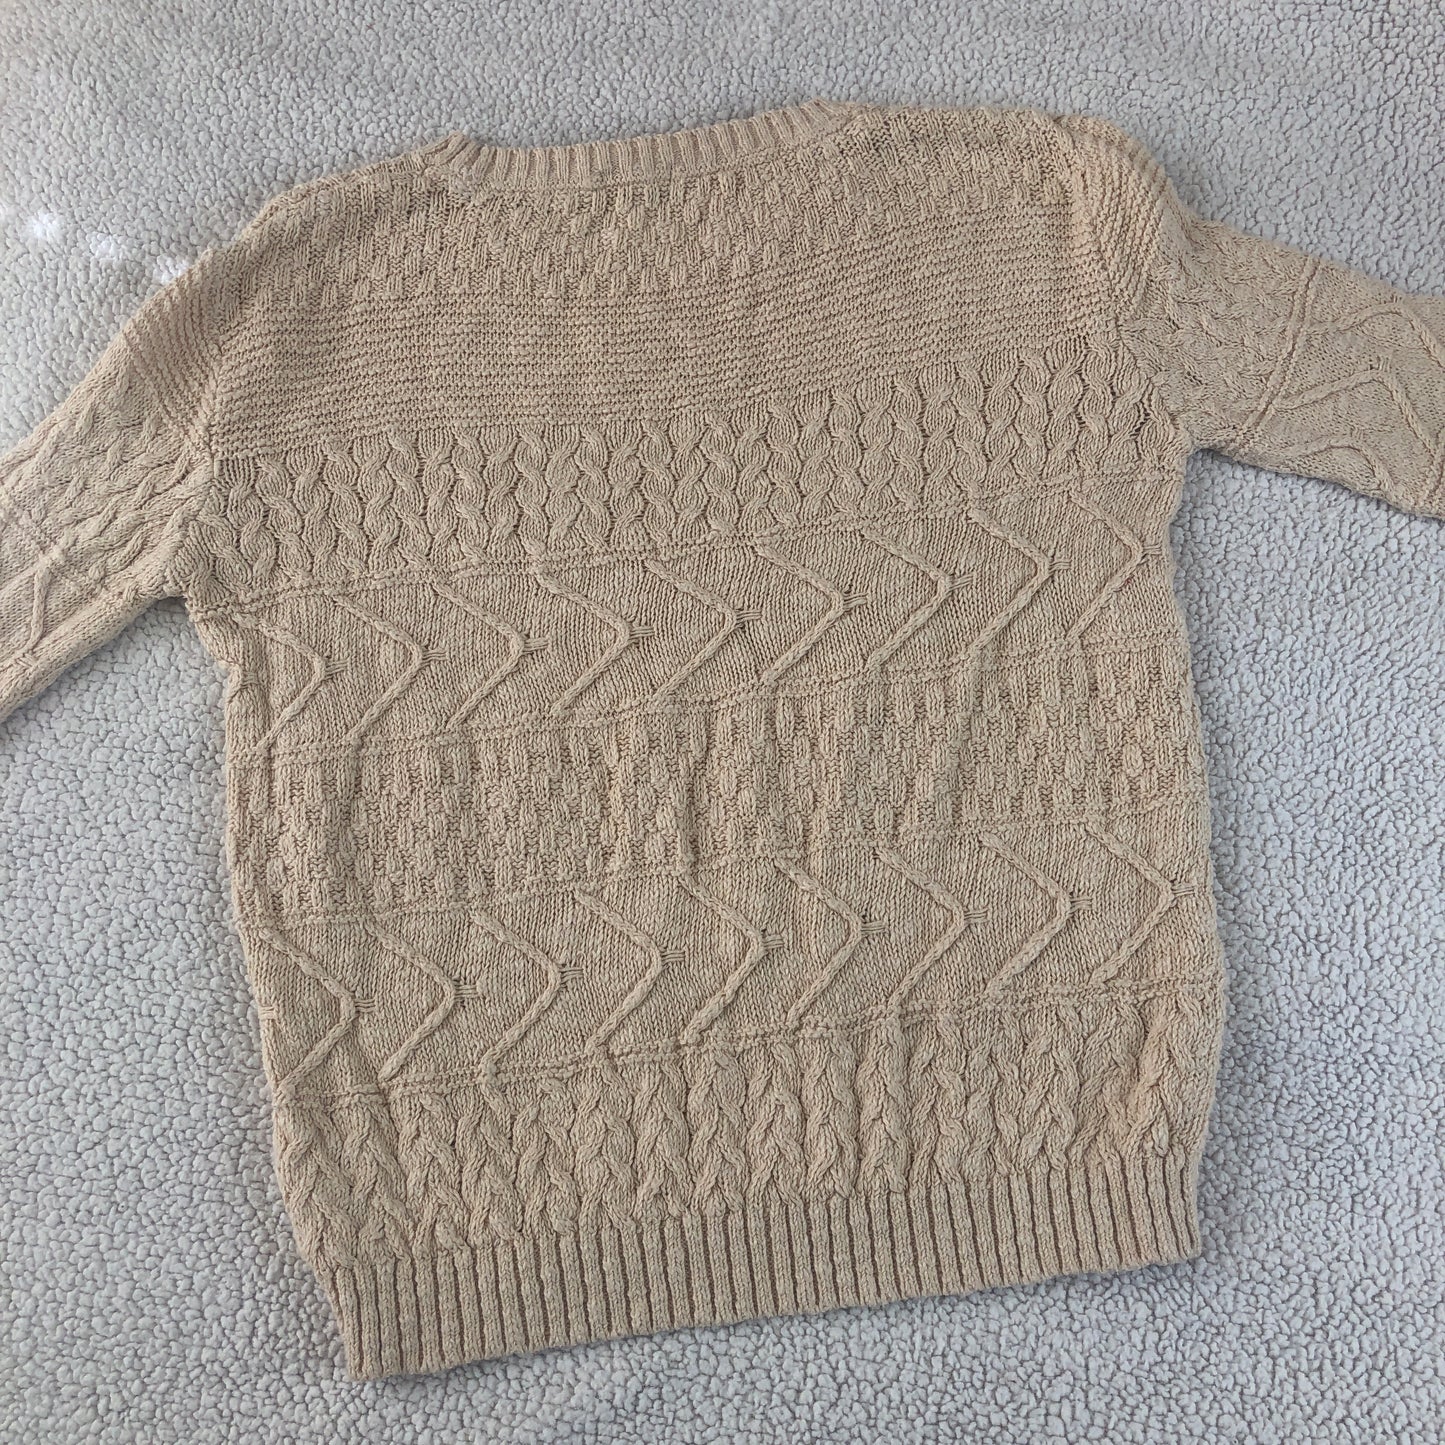 Cream Fair Isle textured knit sweater